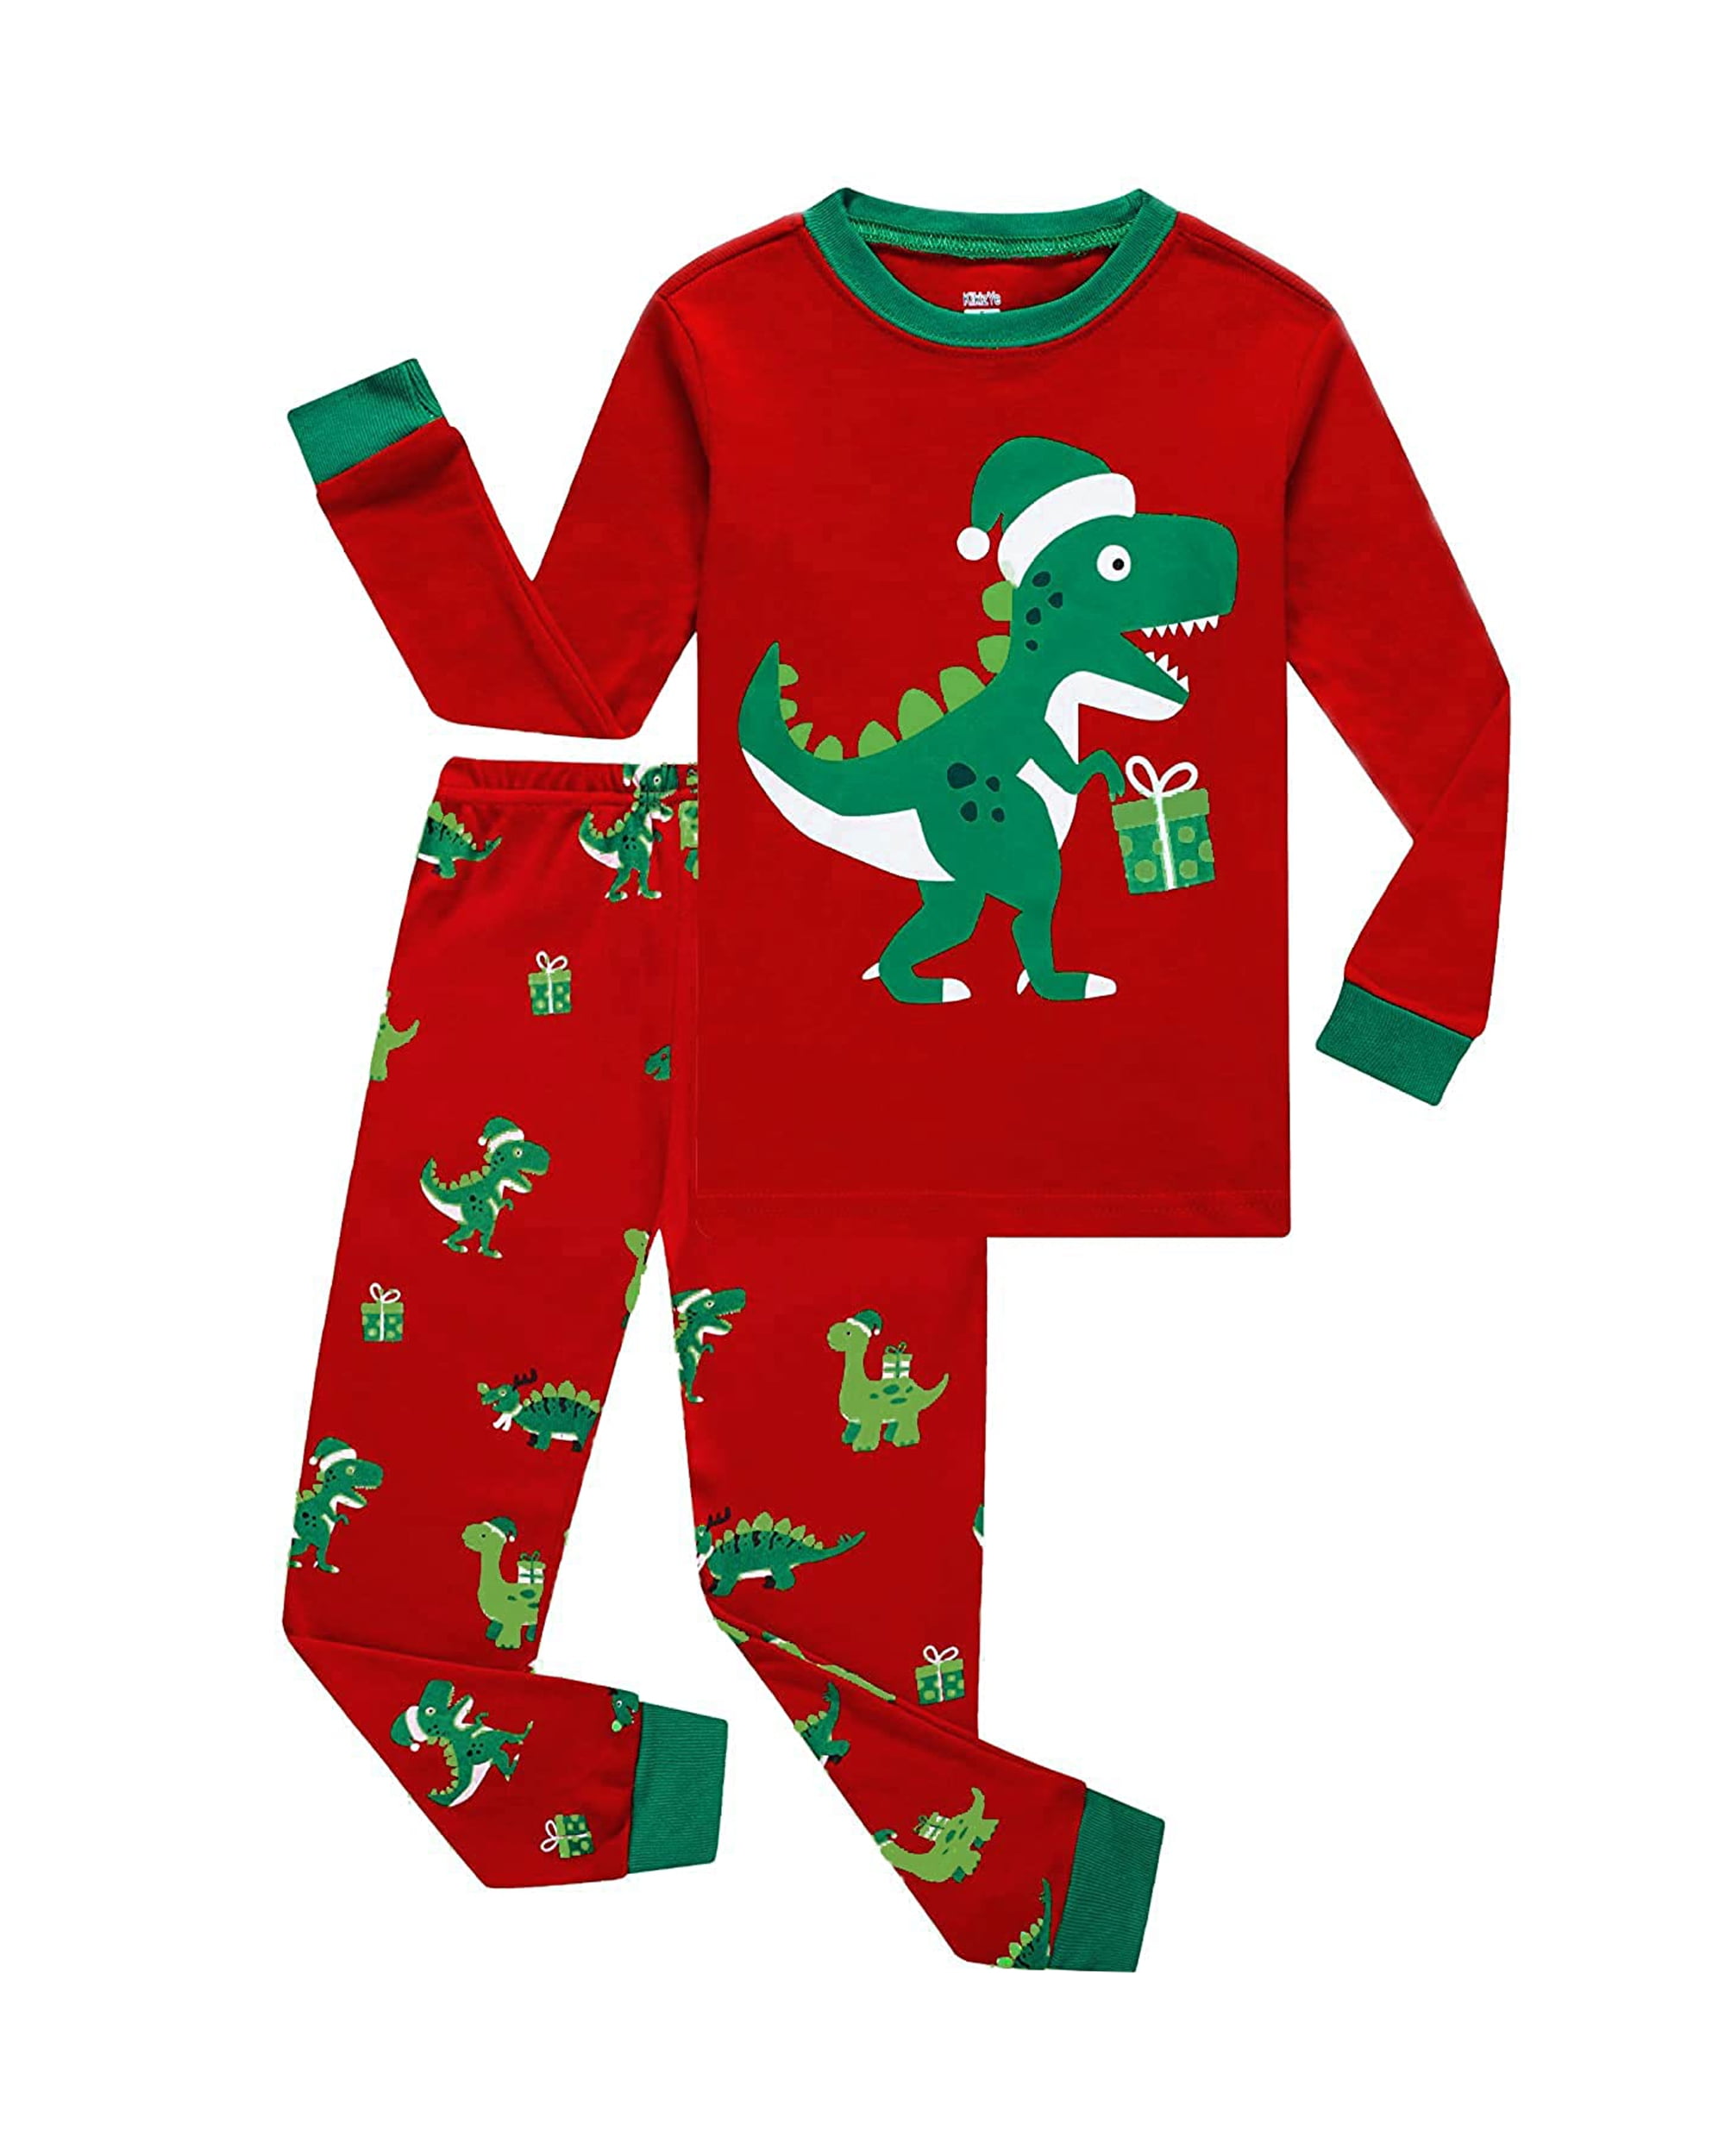 Tkiames Boys Pyjamas for Boys Truck Dinosaur Kid Pjs Toddler Clothes Long Sleeve Nightwear Sleepwear Set 